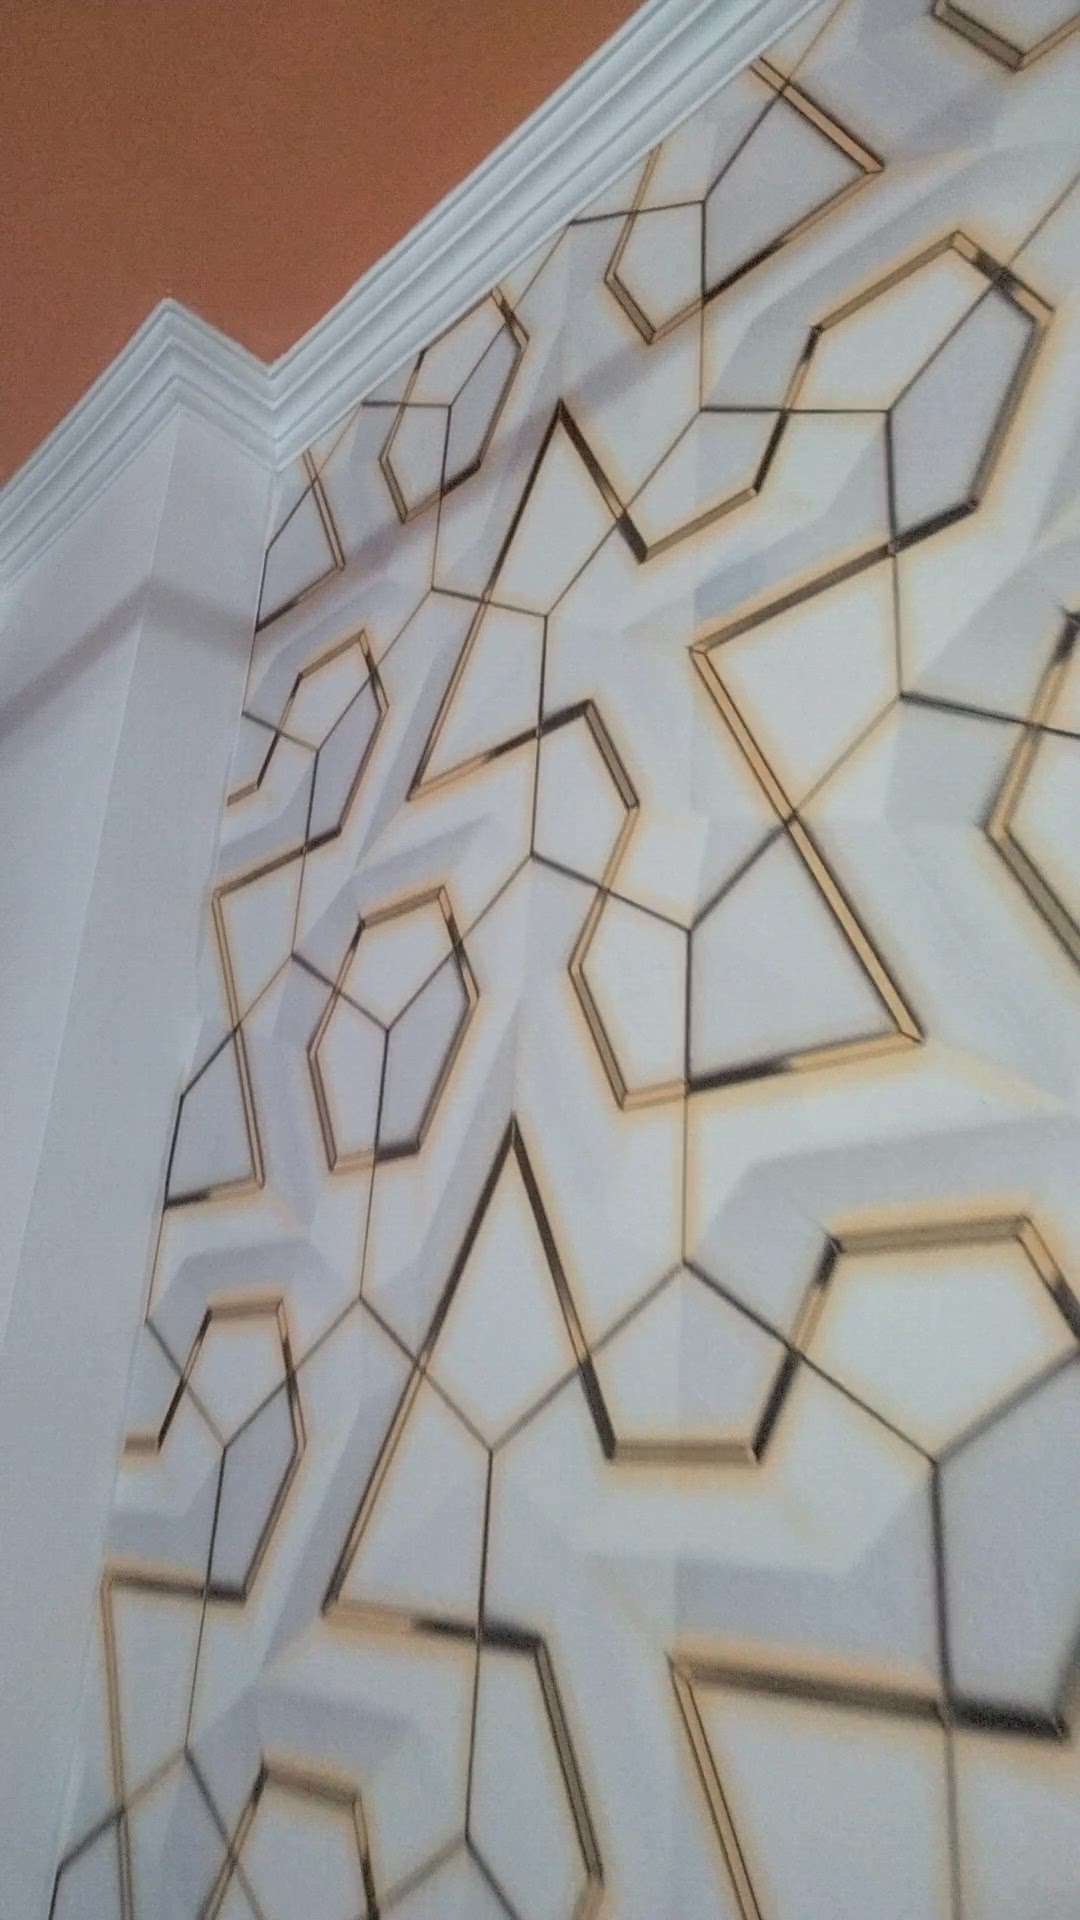 Modan bedroom decorating design wallpaper for Walls  #WallDecors  #wallpaperrolles  #Designs